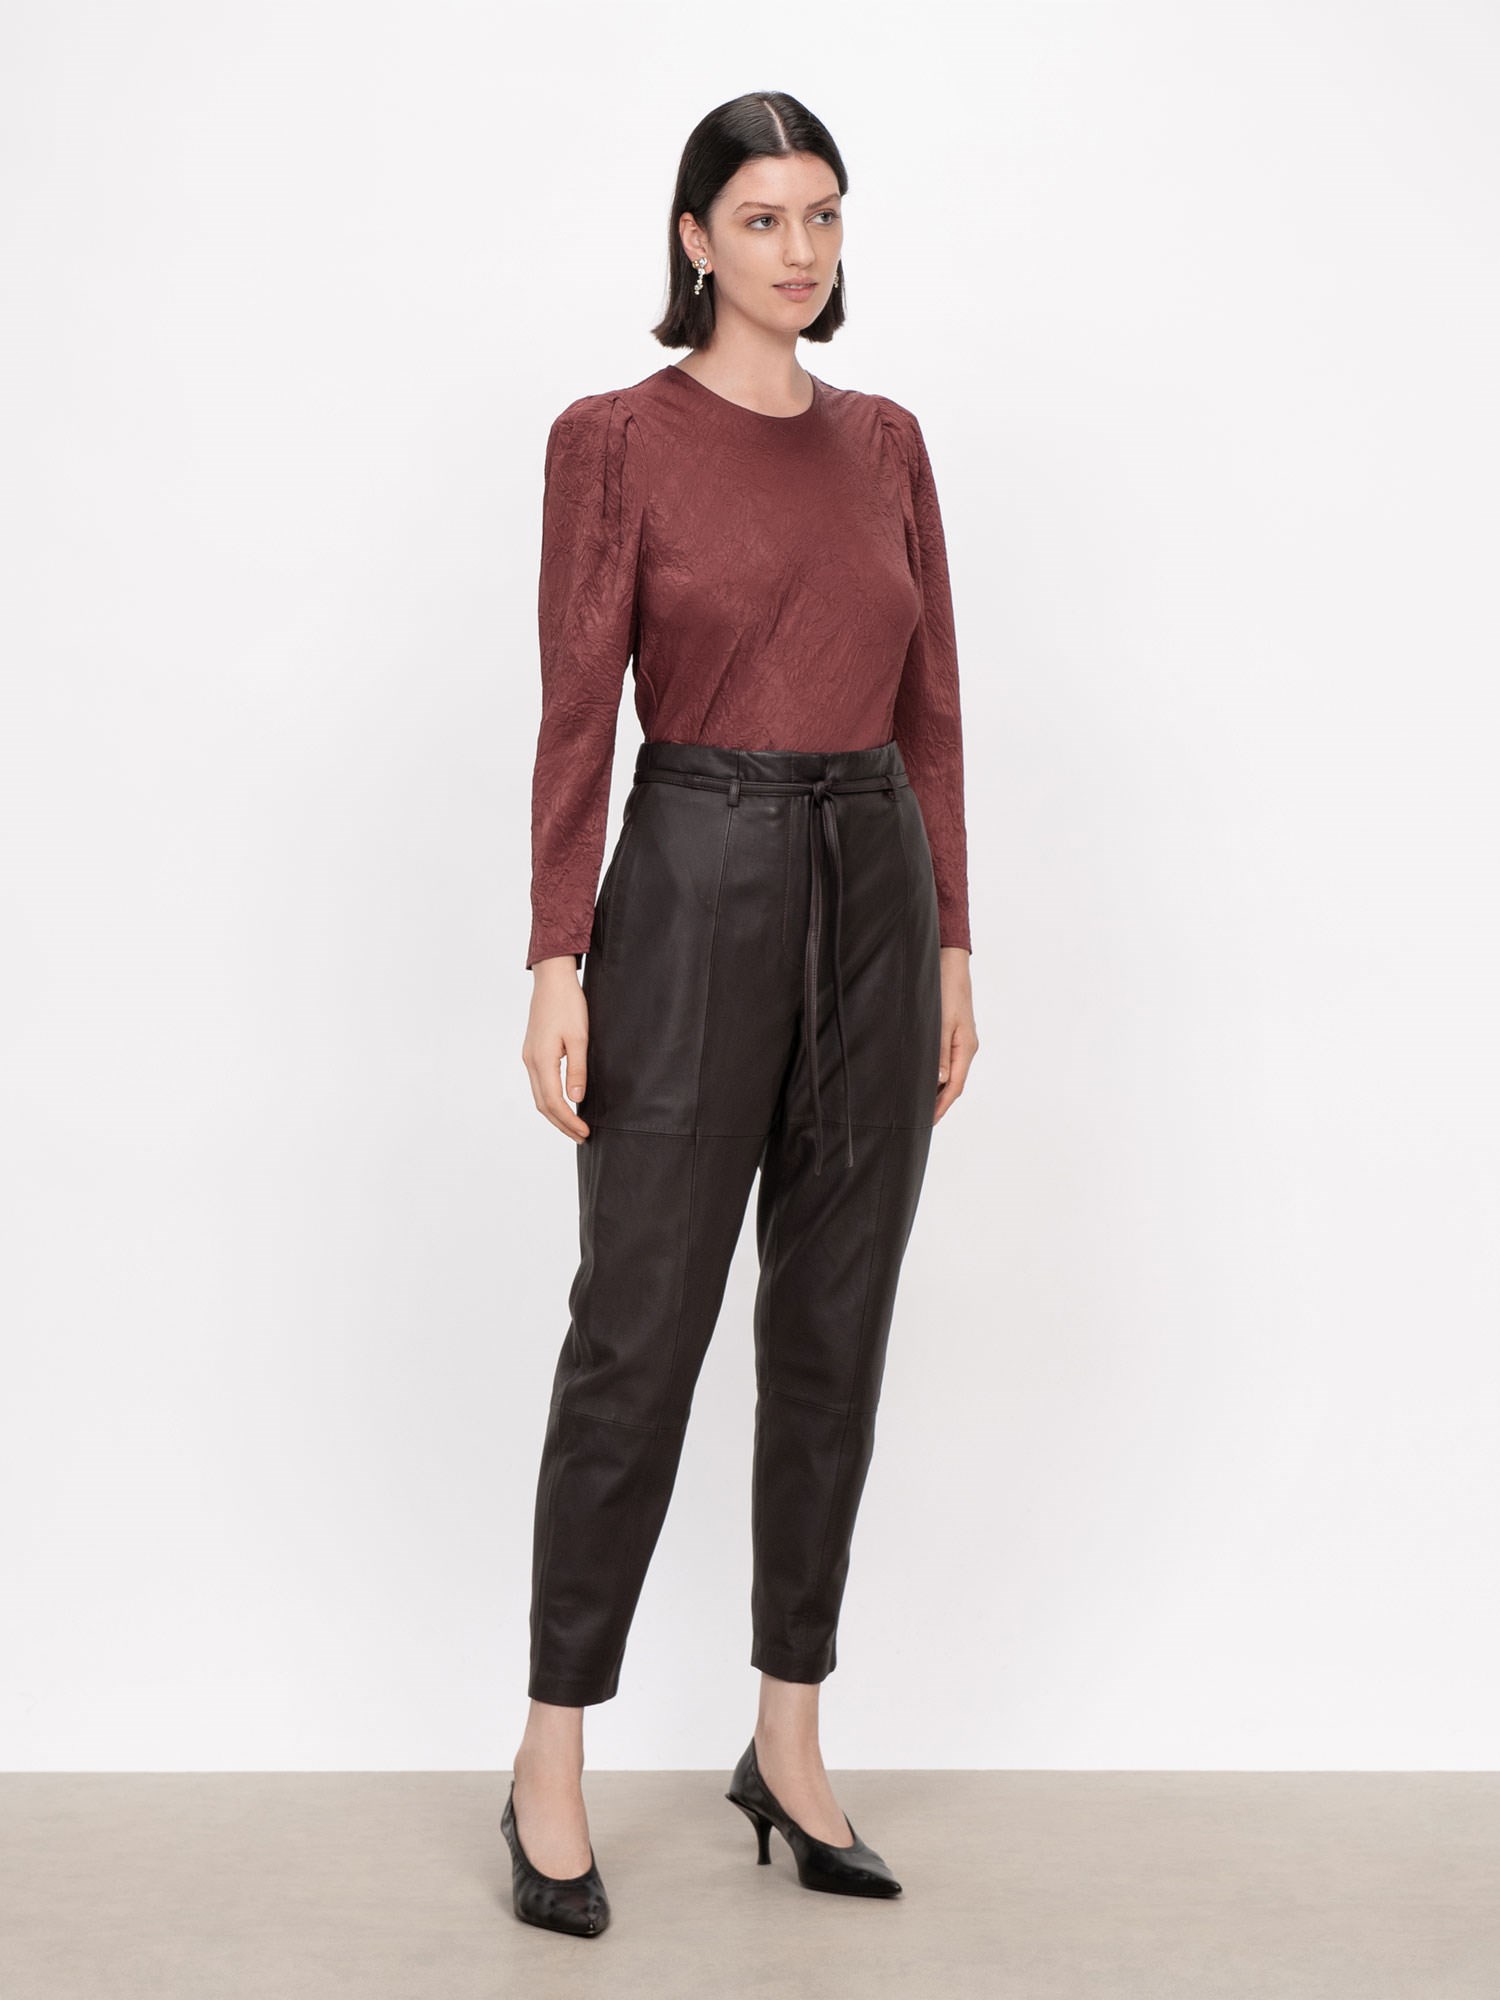 Soft Leather Tie Pant | Buy Pants Online - Veronika Maine